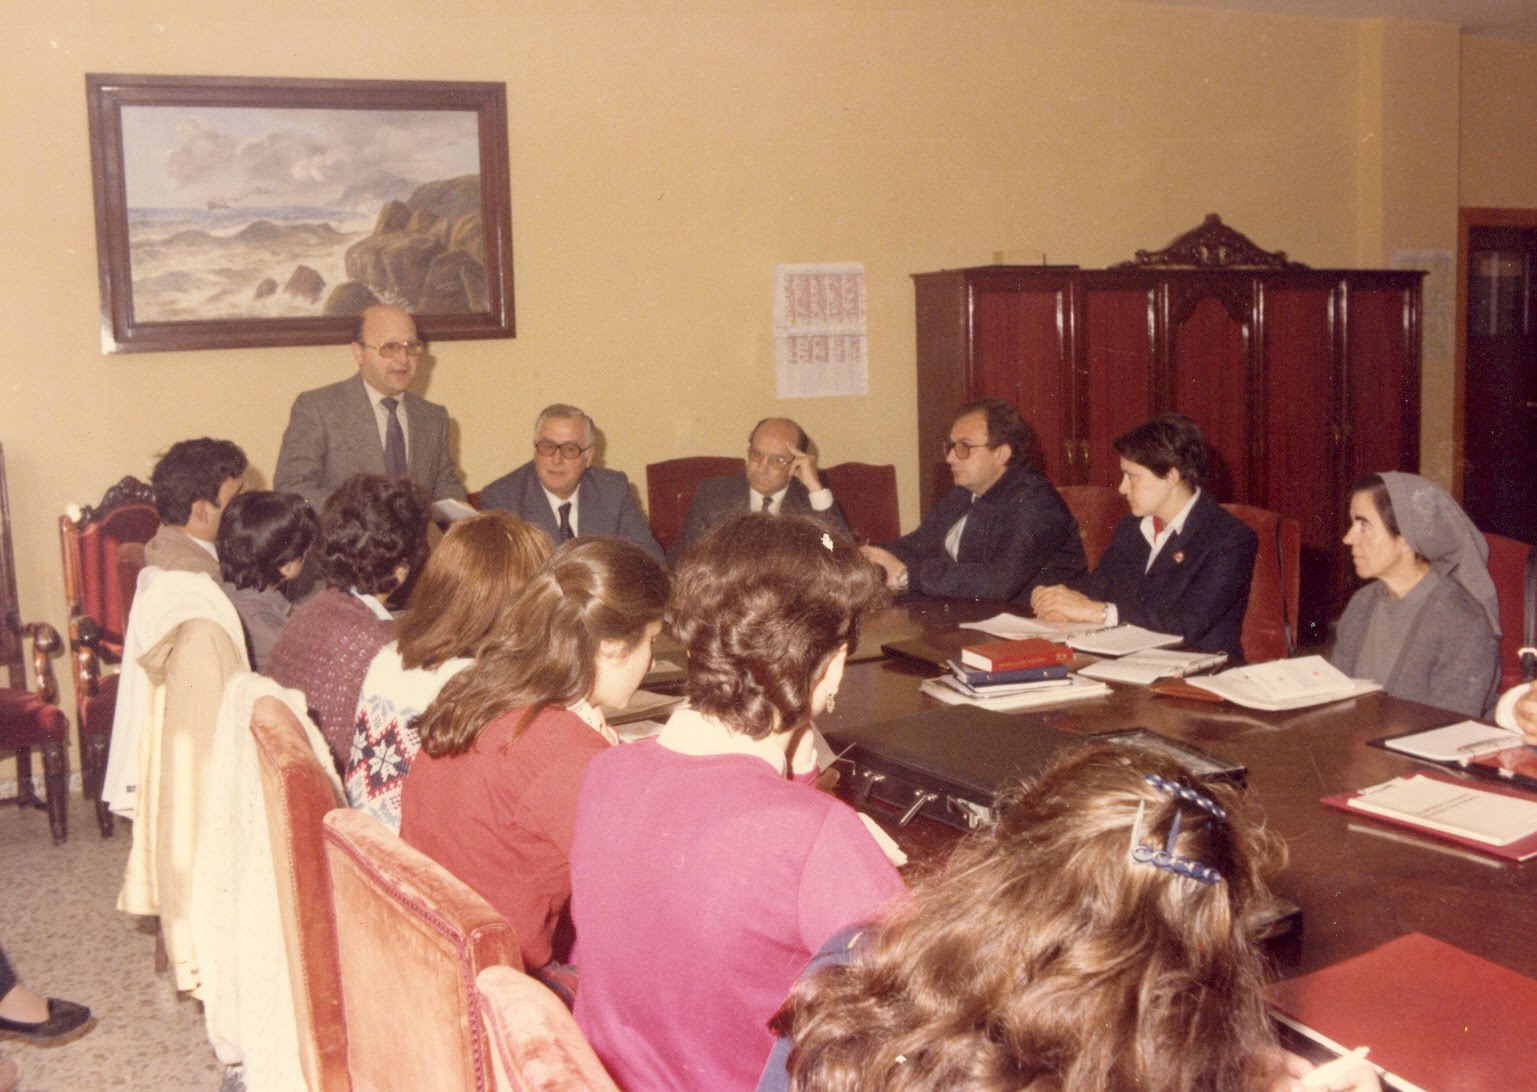 INSTITUTO POLITÉCNICO DE FORMACIÓN PROFESIONAL REYES DE ESPAÑA. CURSO 1981/82.